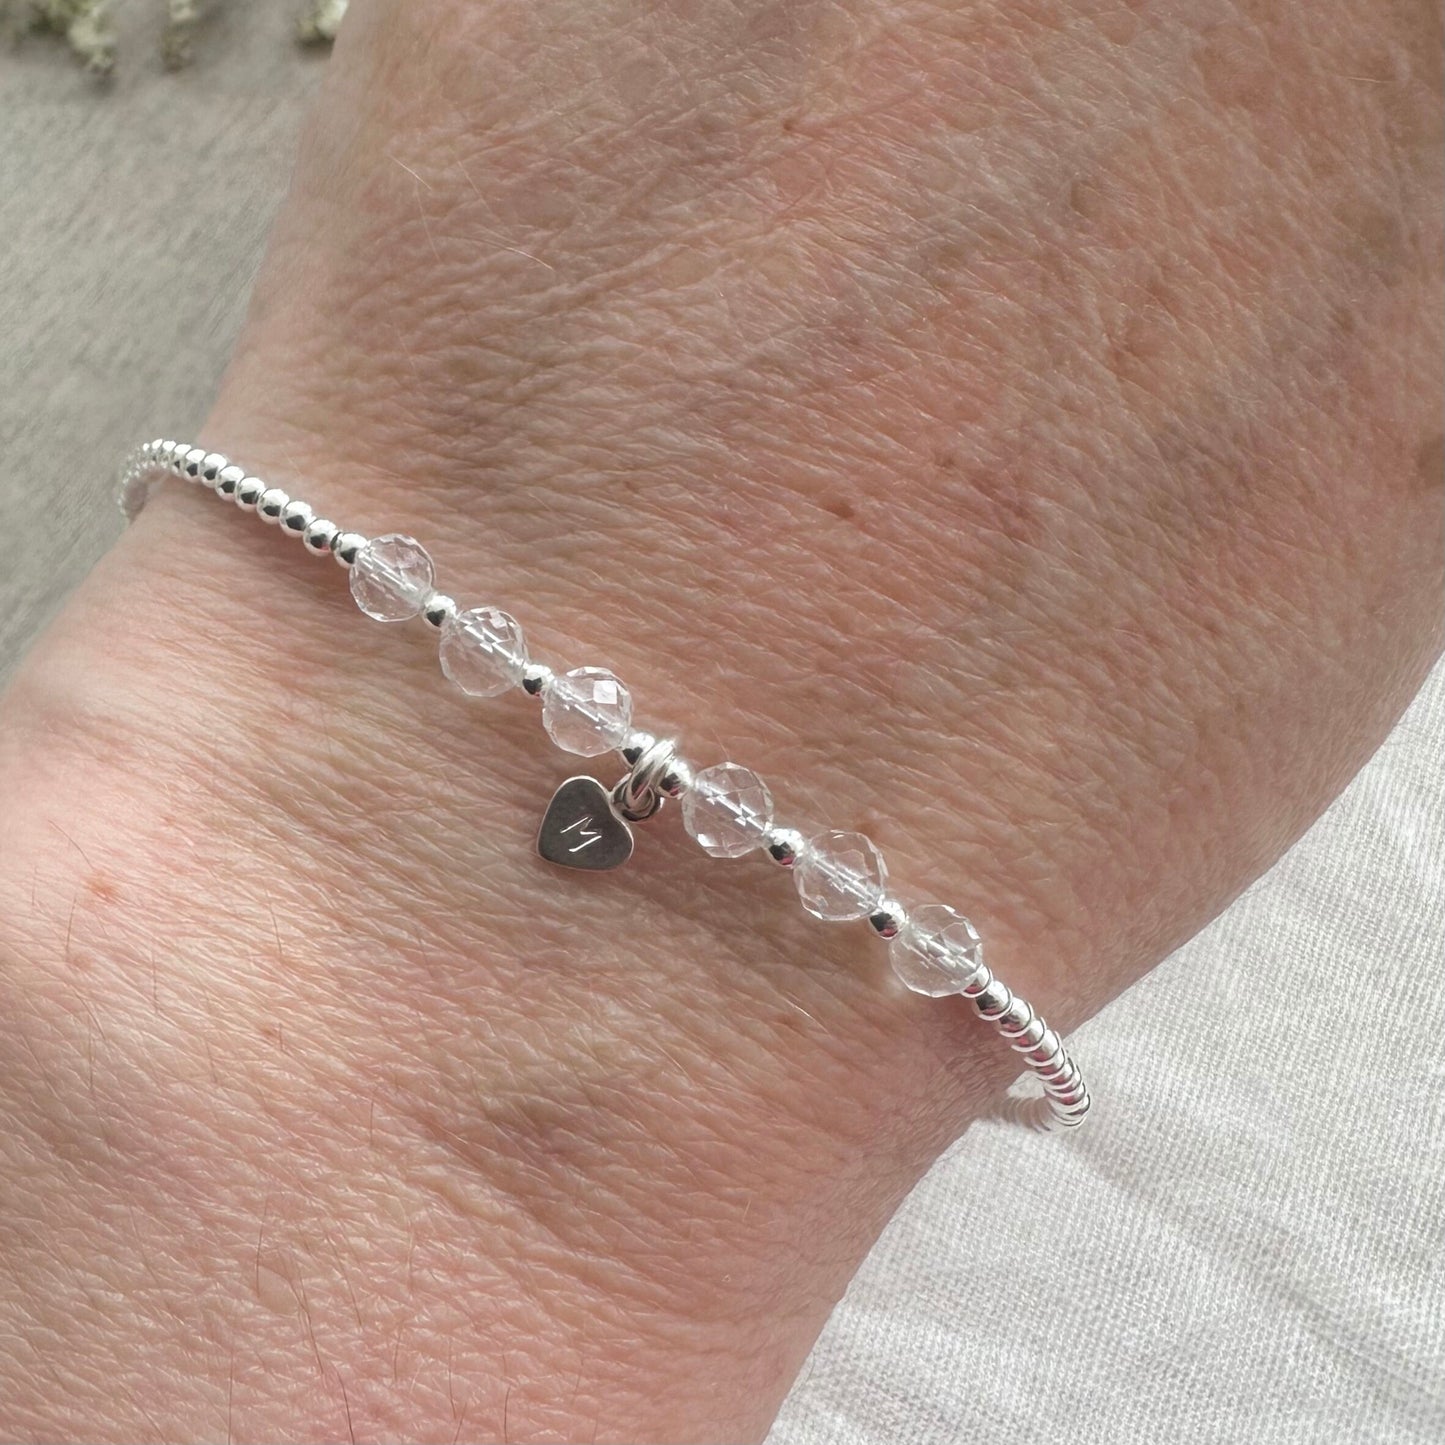 Personalised Quartz Bracelet, nft, Dainty April Birthstone Jewellery in Sterling Silver